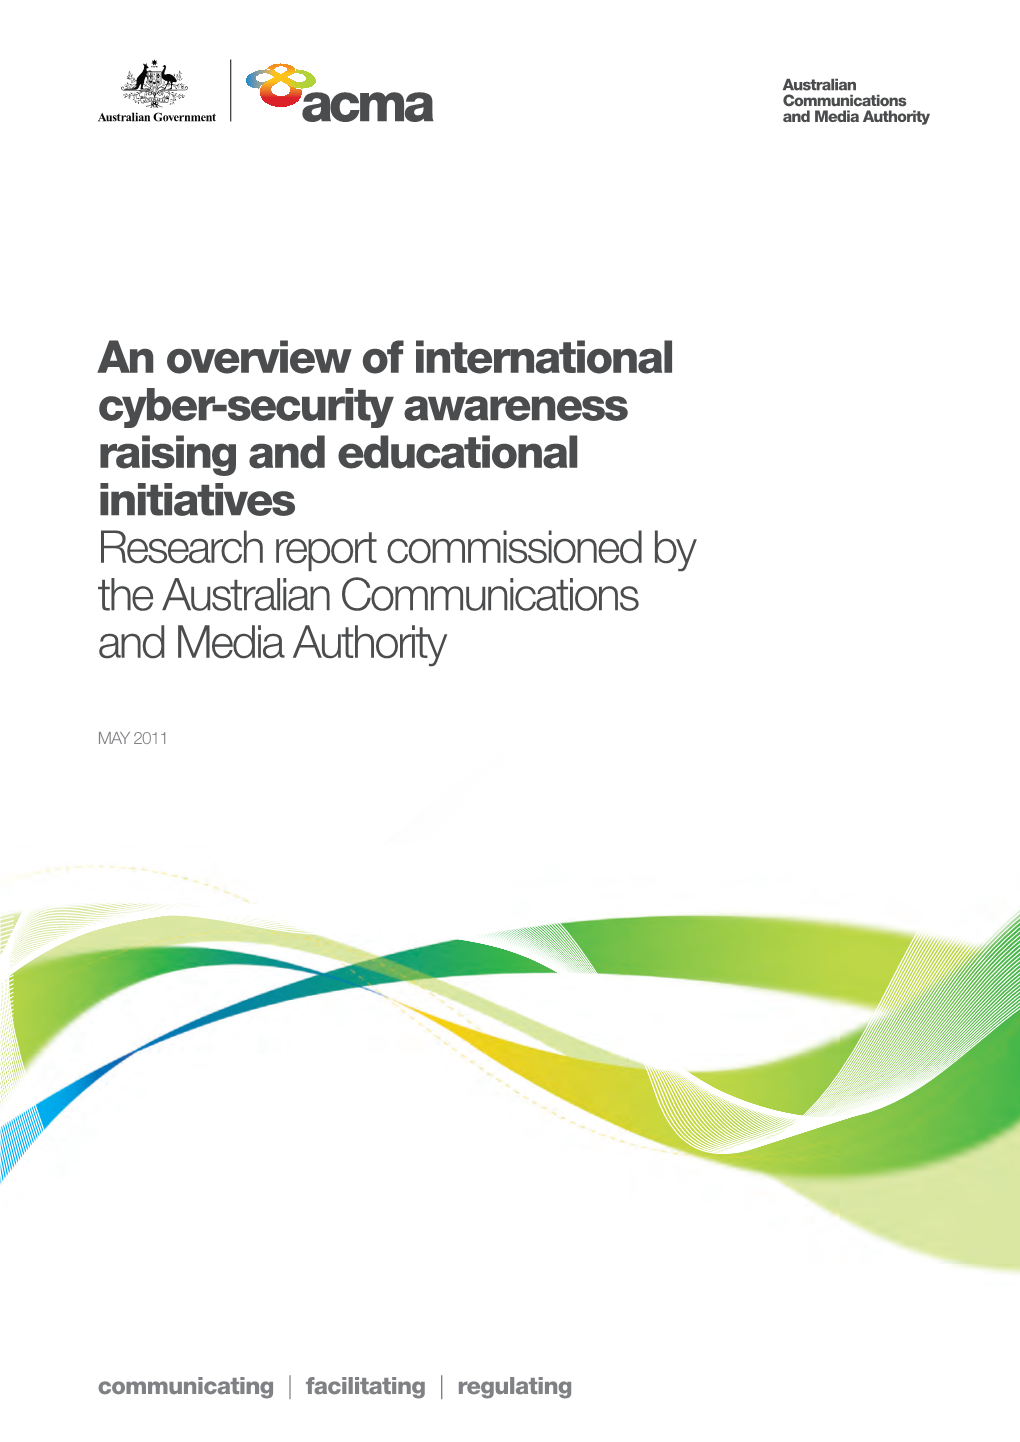 An Overview of International Cyber-Security Awareness Raising